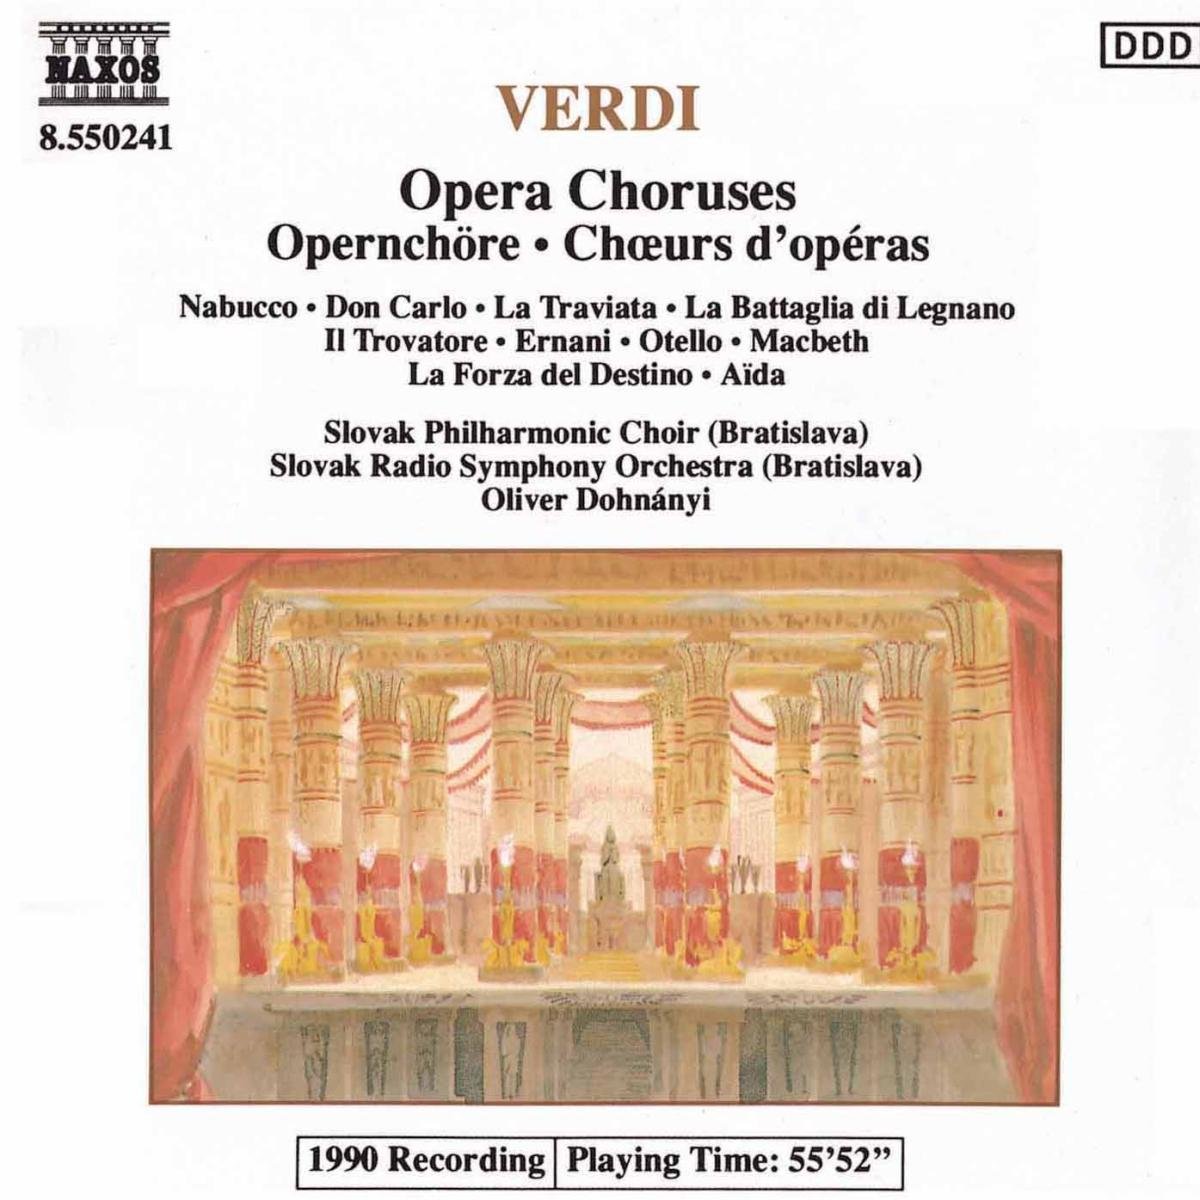 Opera choruses | Giuseppe Verdi